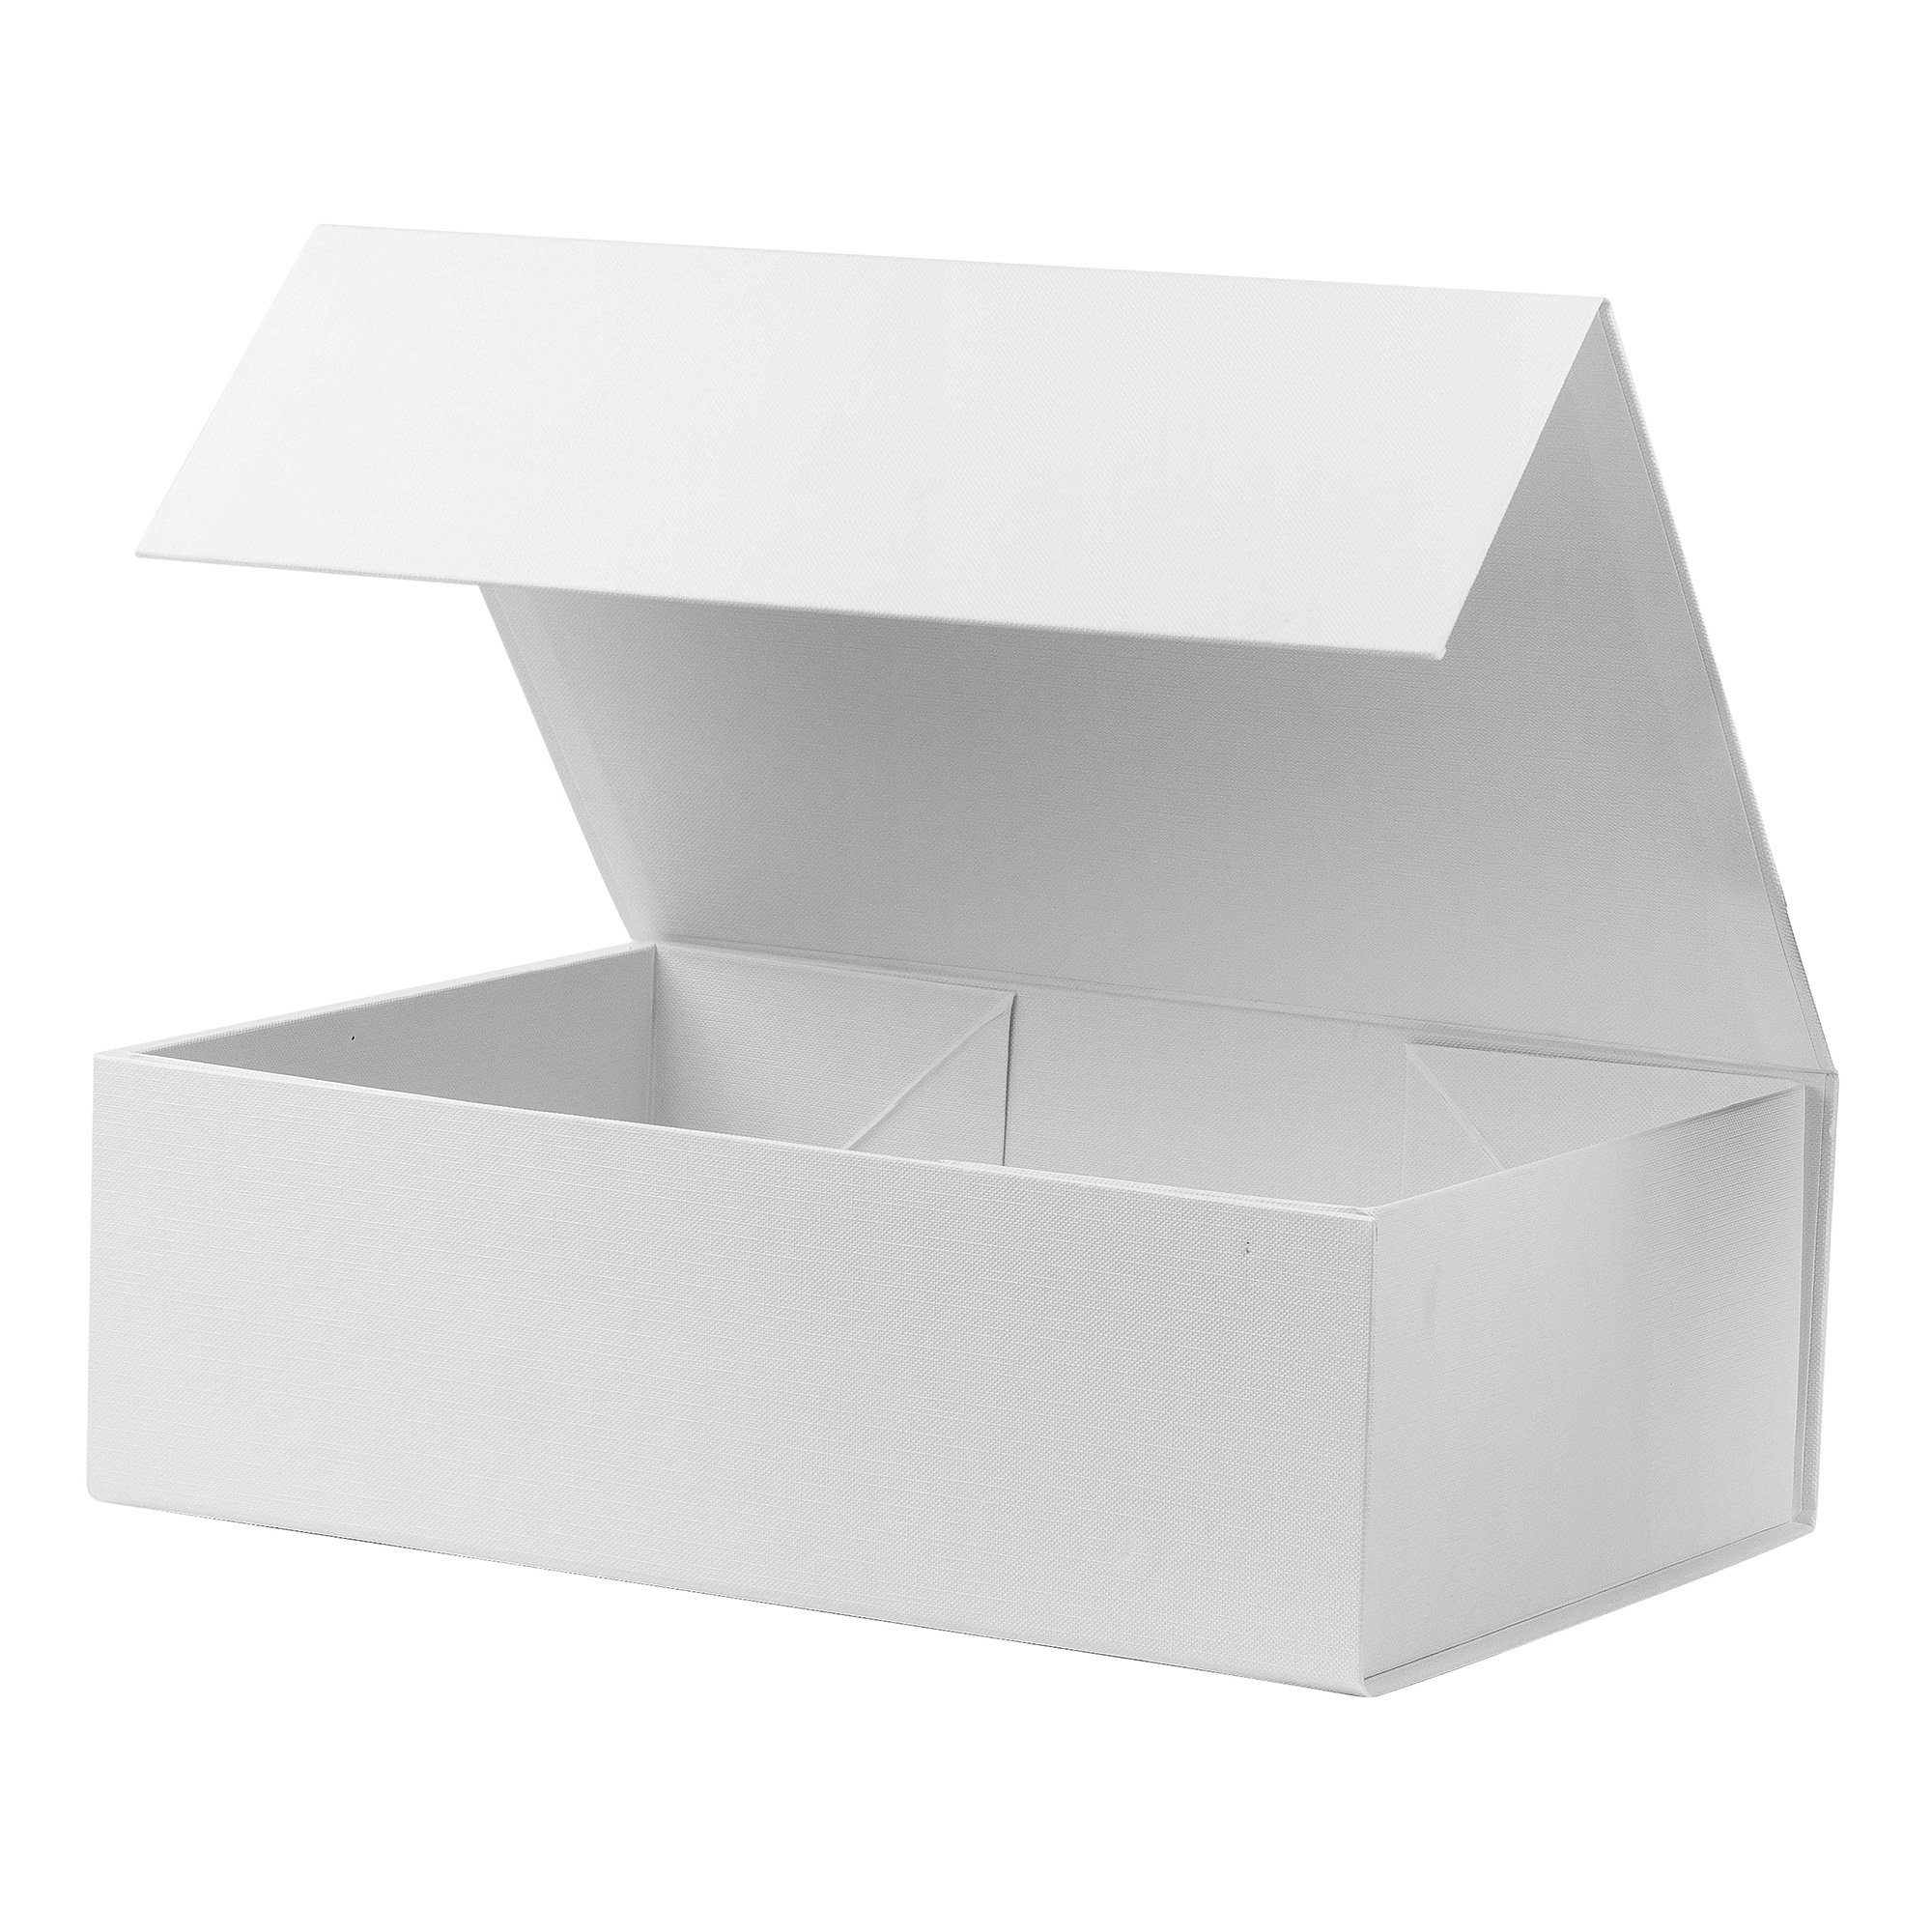 AdelDream Aufbewahrungsbox Gift Box, Magnetic Gift Box, Reusable Decorative Box Weiß